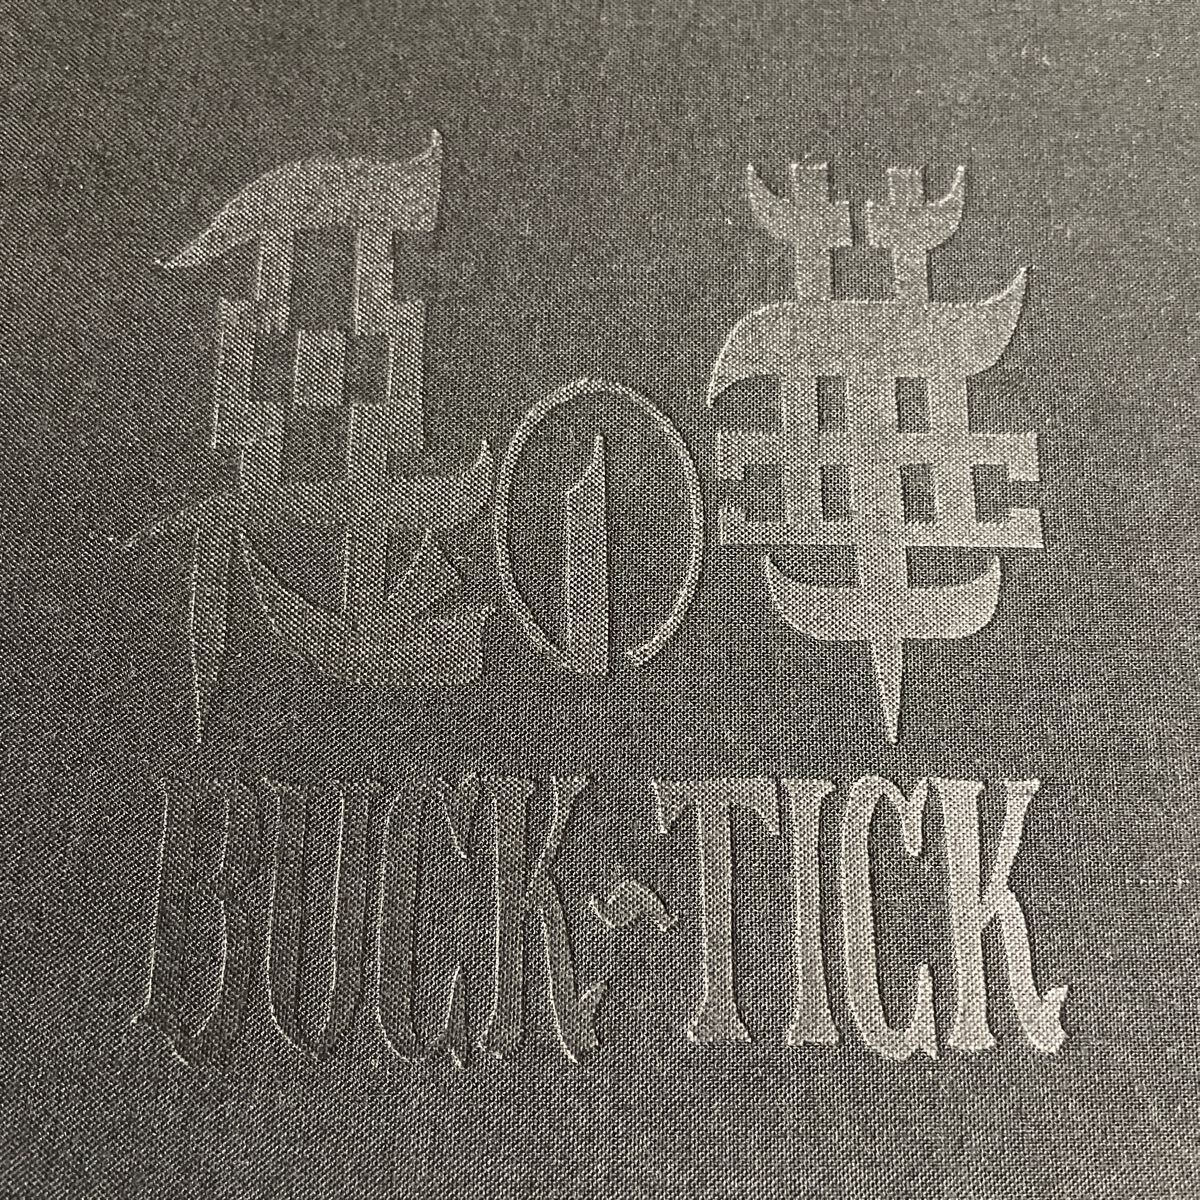 BUCK-TICK 惡の華 写真集 バクチク ツアーパンフレット_画像5